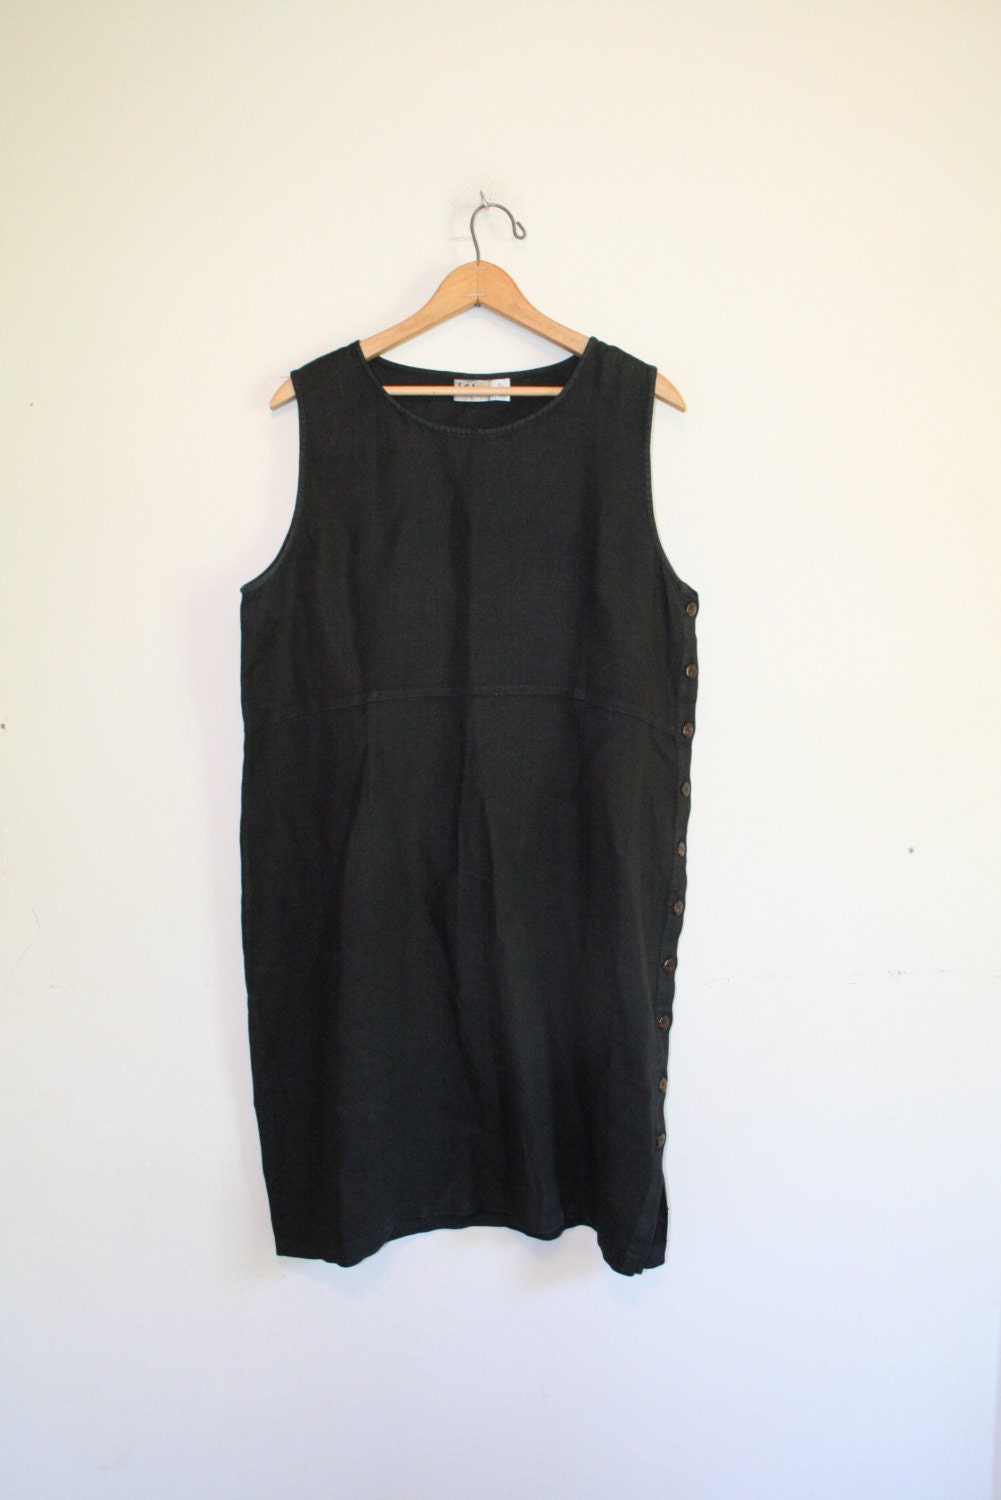 MINIMAL LINEN DRESS  size large  90s  by GUTTERSHOP on Etsy